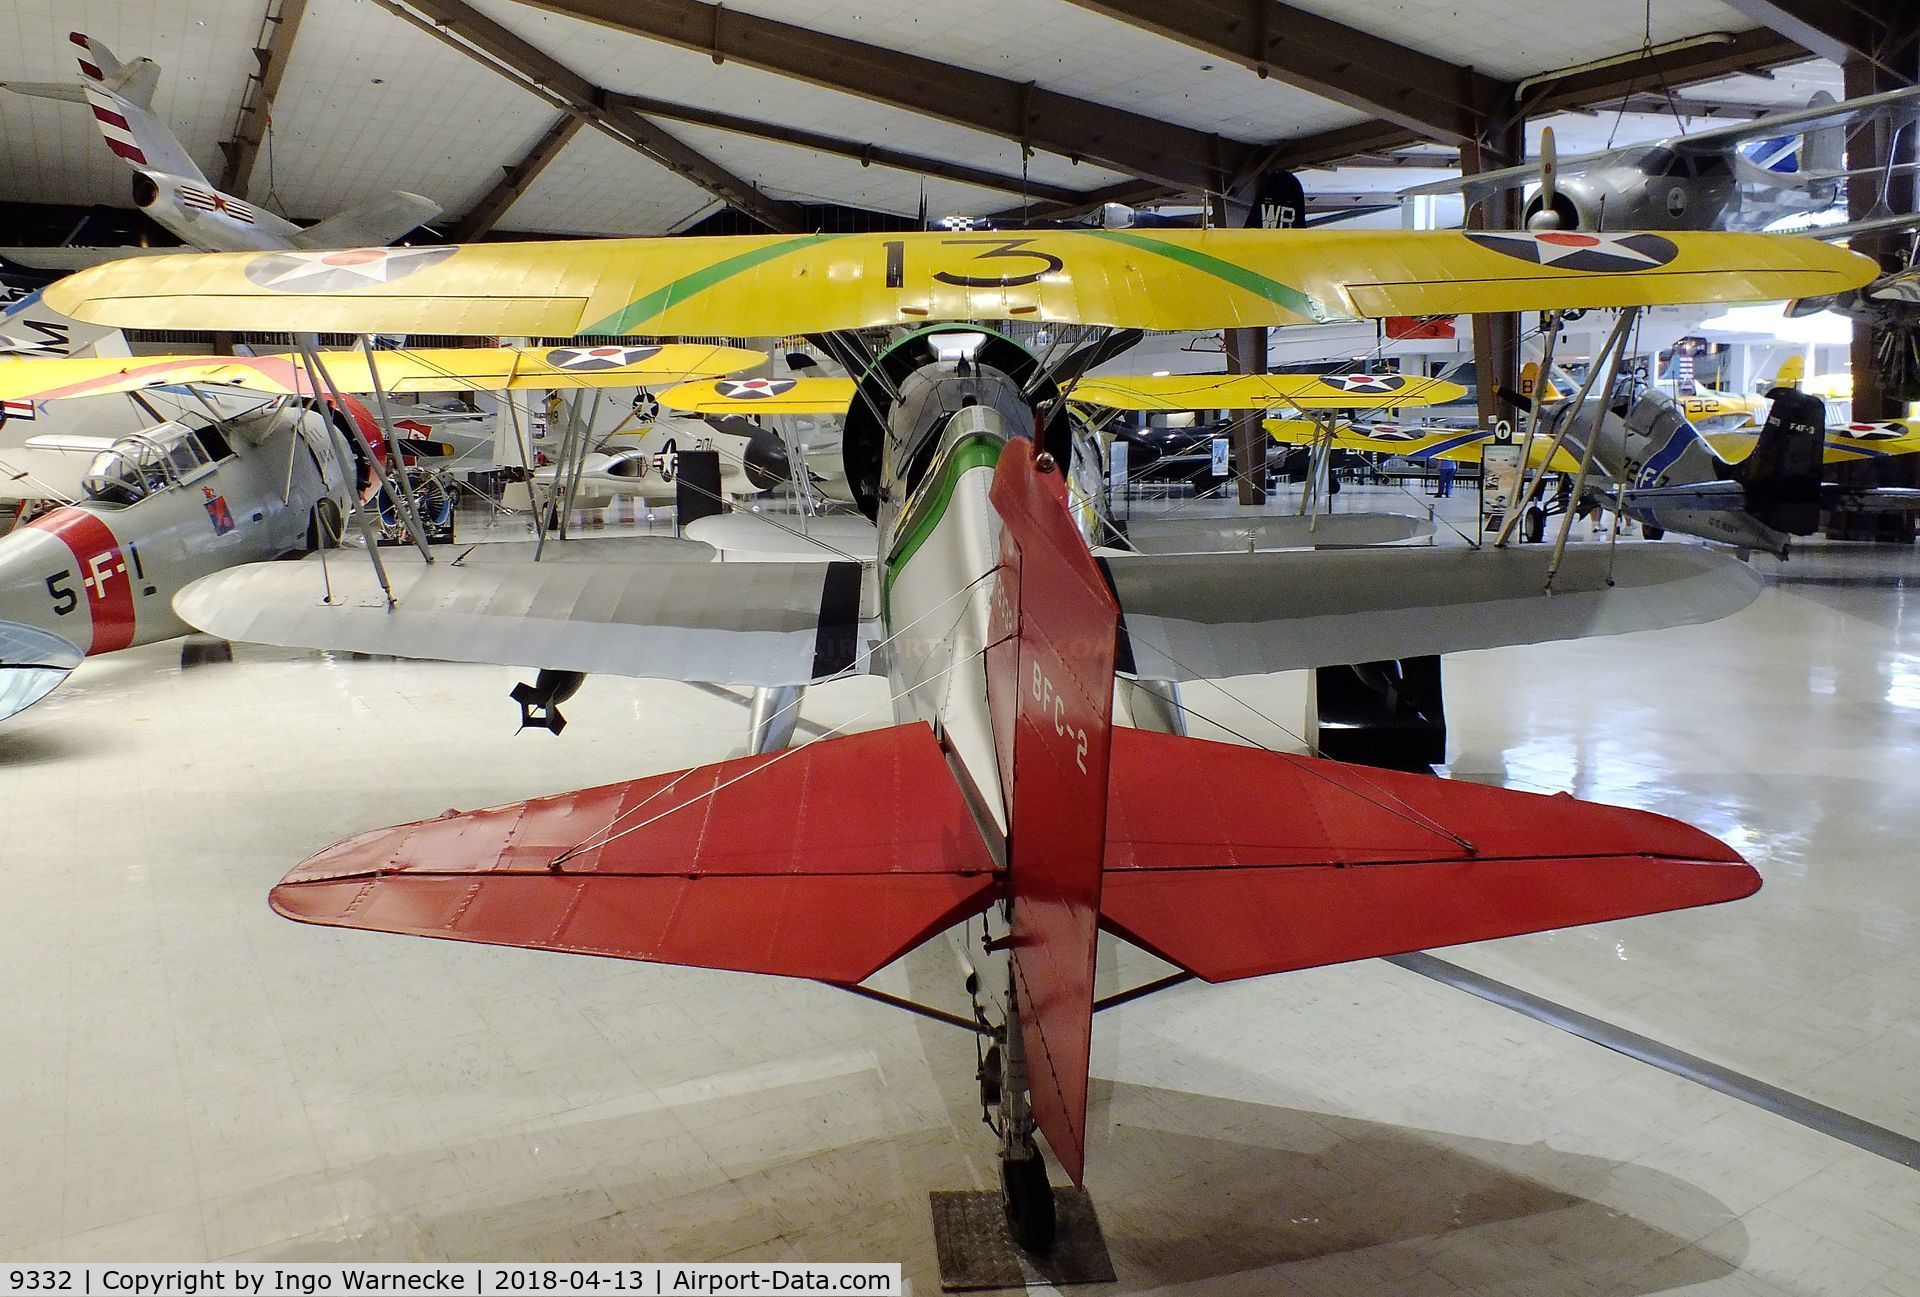 9332, 1937 Curtiss BFC-2 Goshawk C/N Not found 9332, Curtiss BFC-2 Goshawk at the NMNA, Pensacola FL